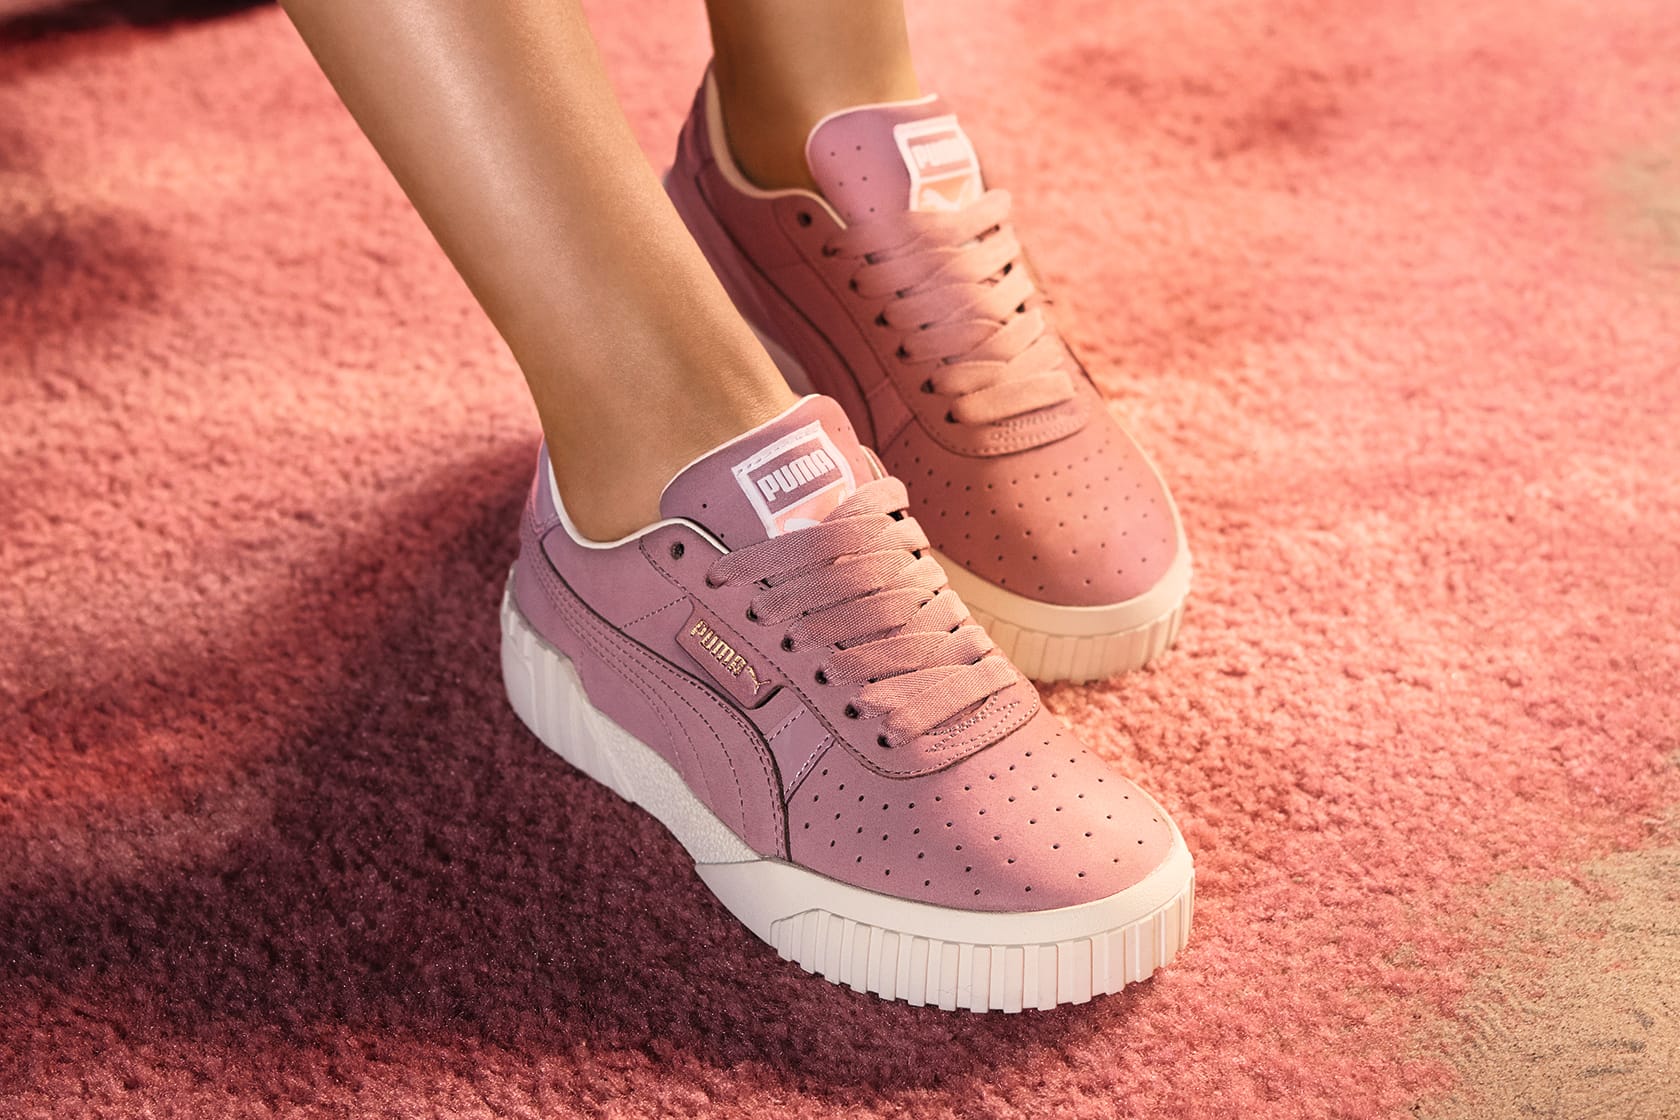 puma selena gomez shoes pink